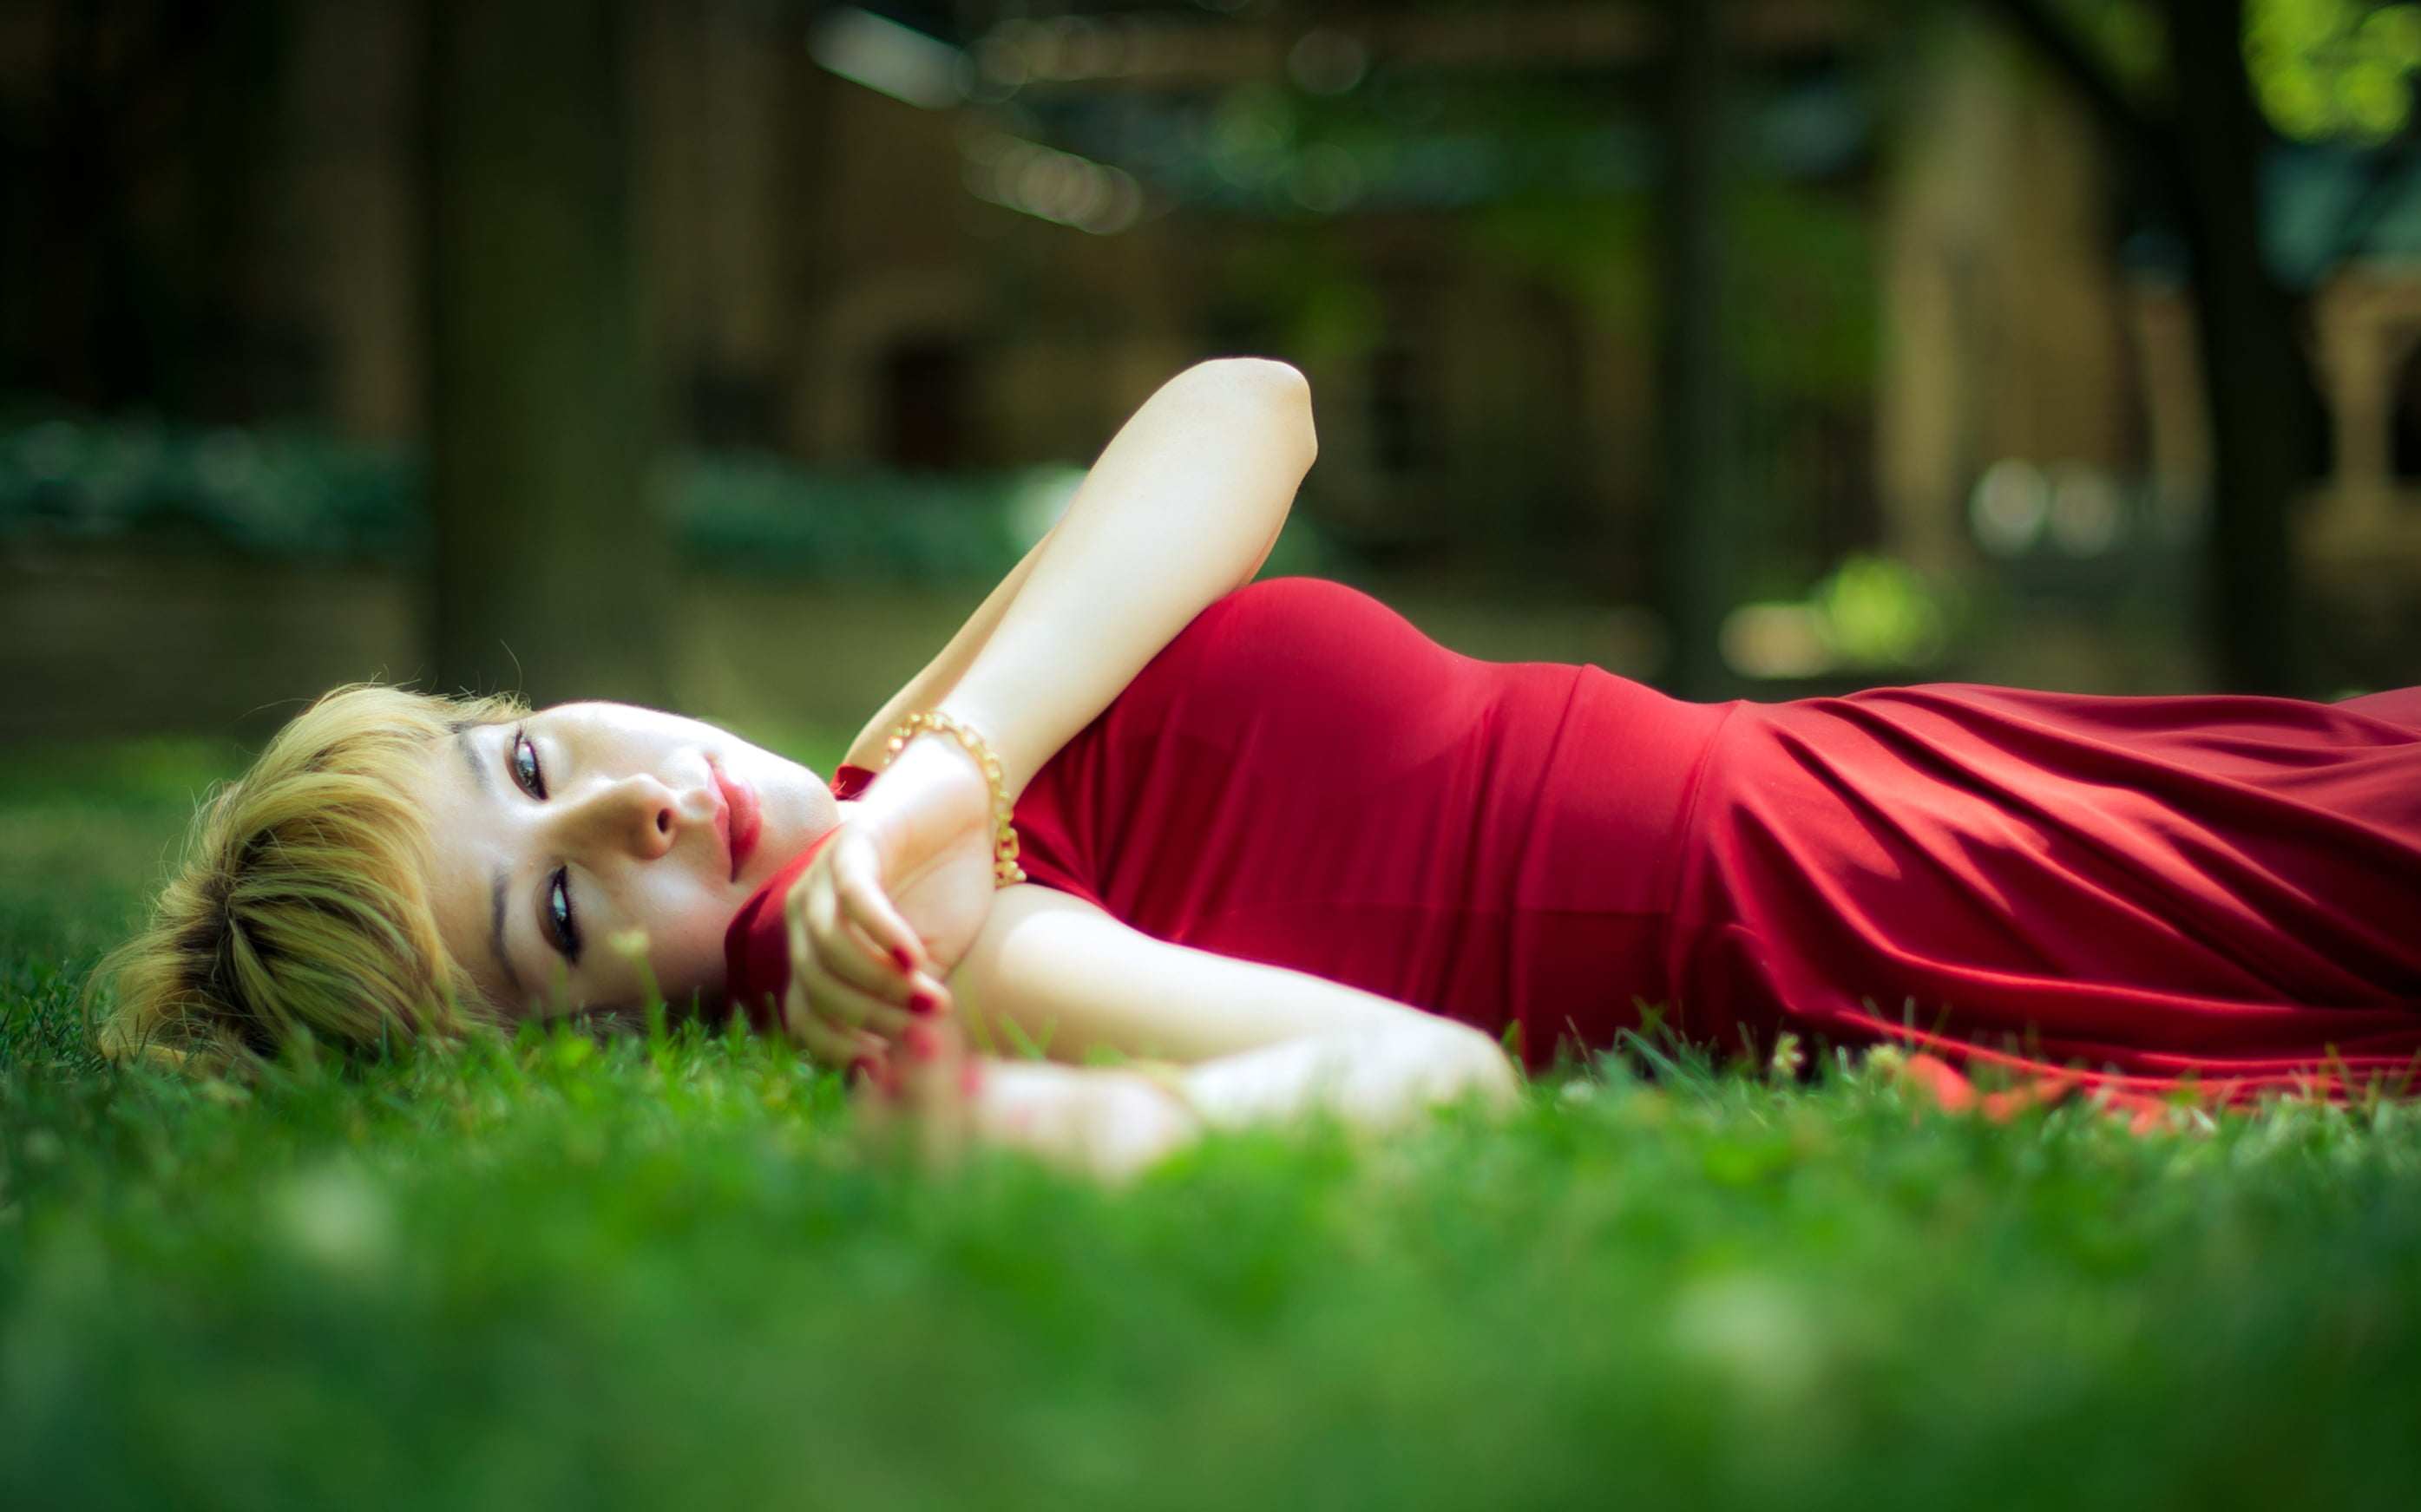 Online Crop Depth Of Field Of Woman In Red Dress Lying On Green Grass